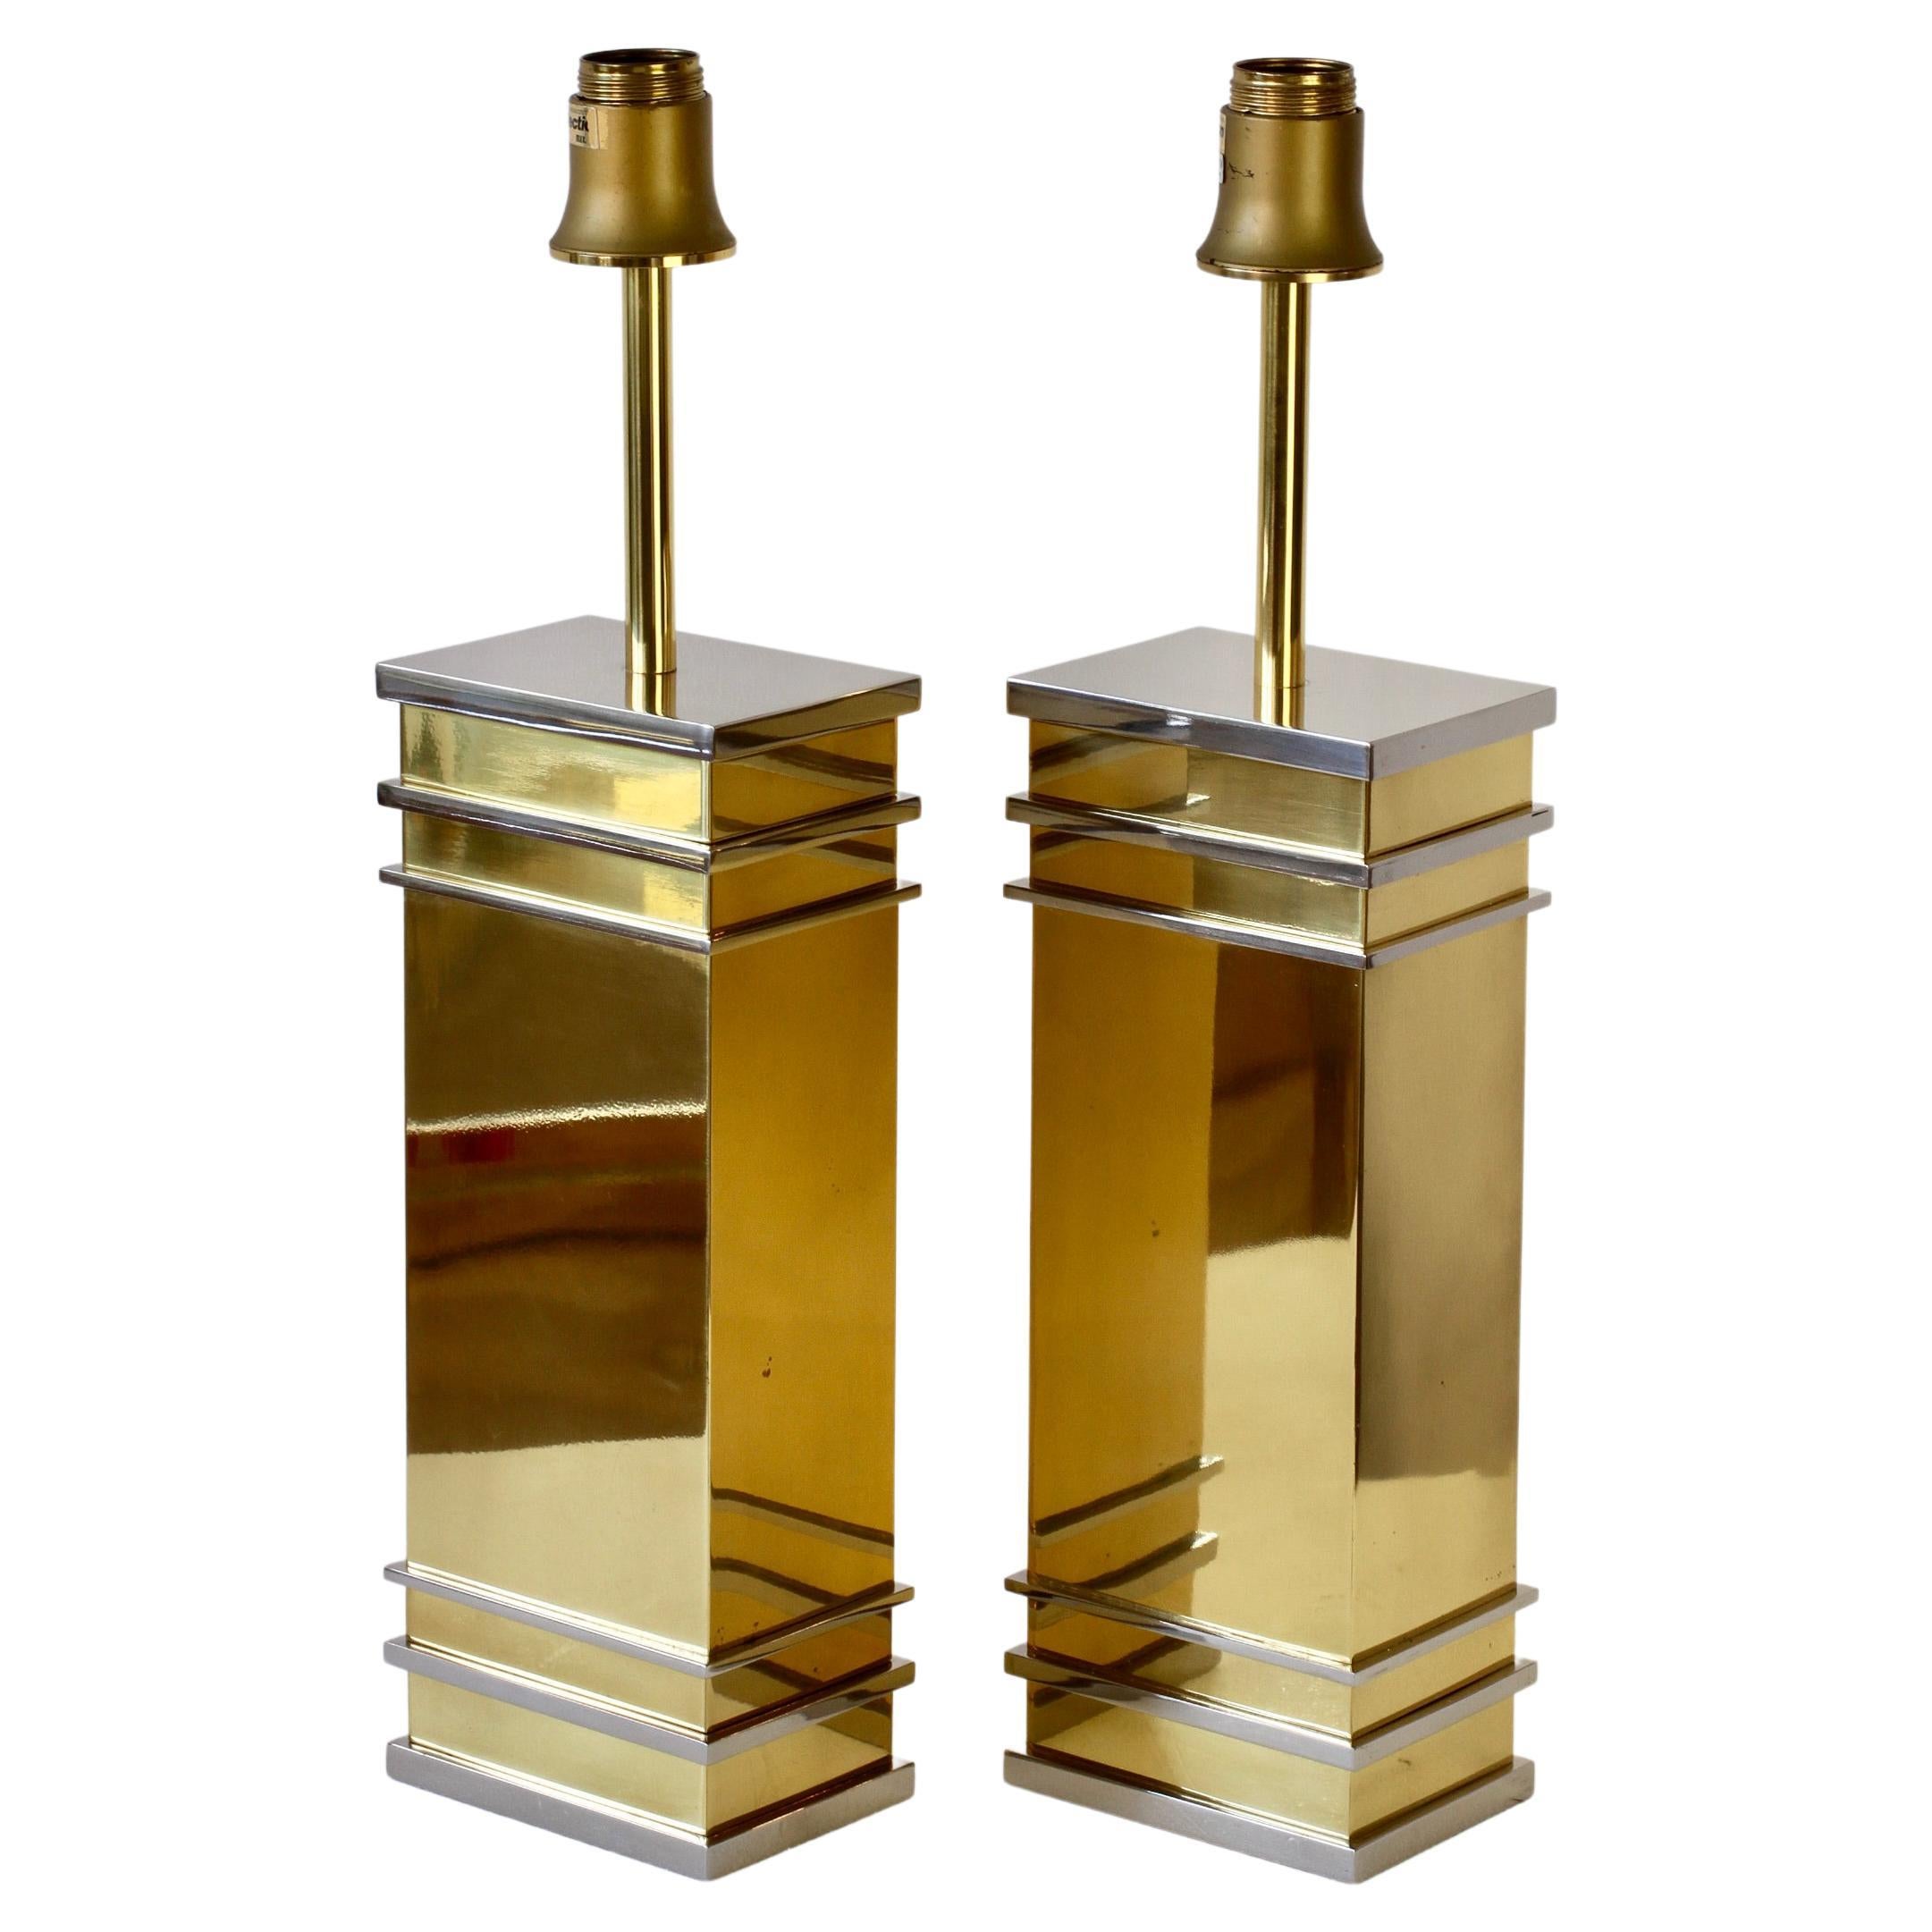 Pair of Brass & Chrome Maison Jansen Style Table Lamps by Vereinigte Werkstätten